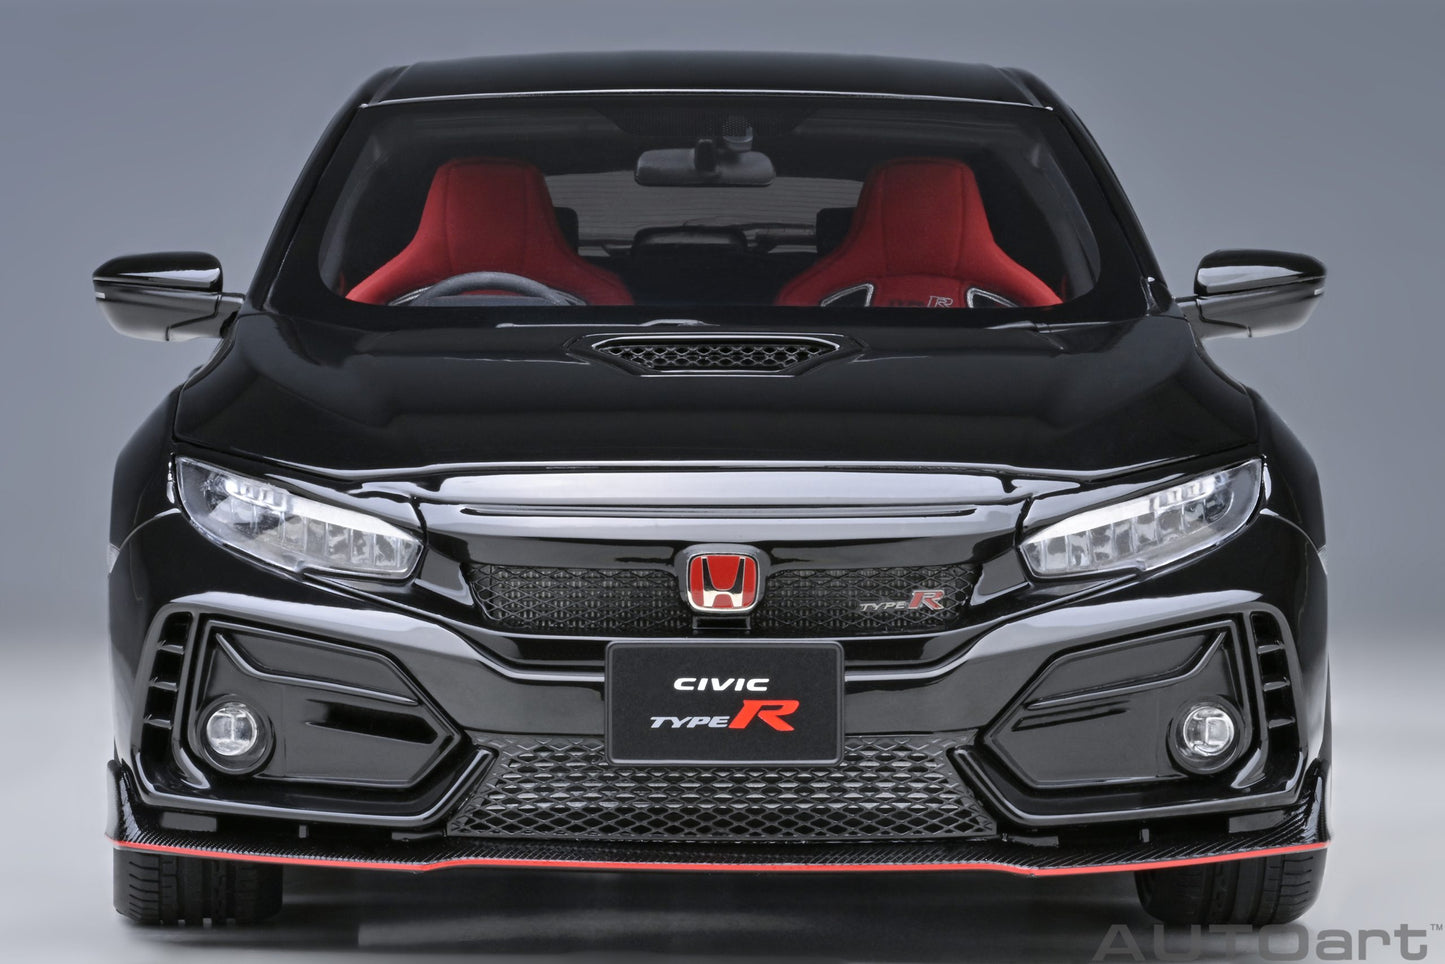 AUTOart 1:18 Honda Civic Type R (FK8) 2021 (Crystal Black Pearl) 73222